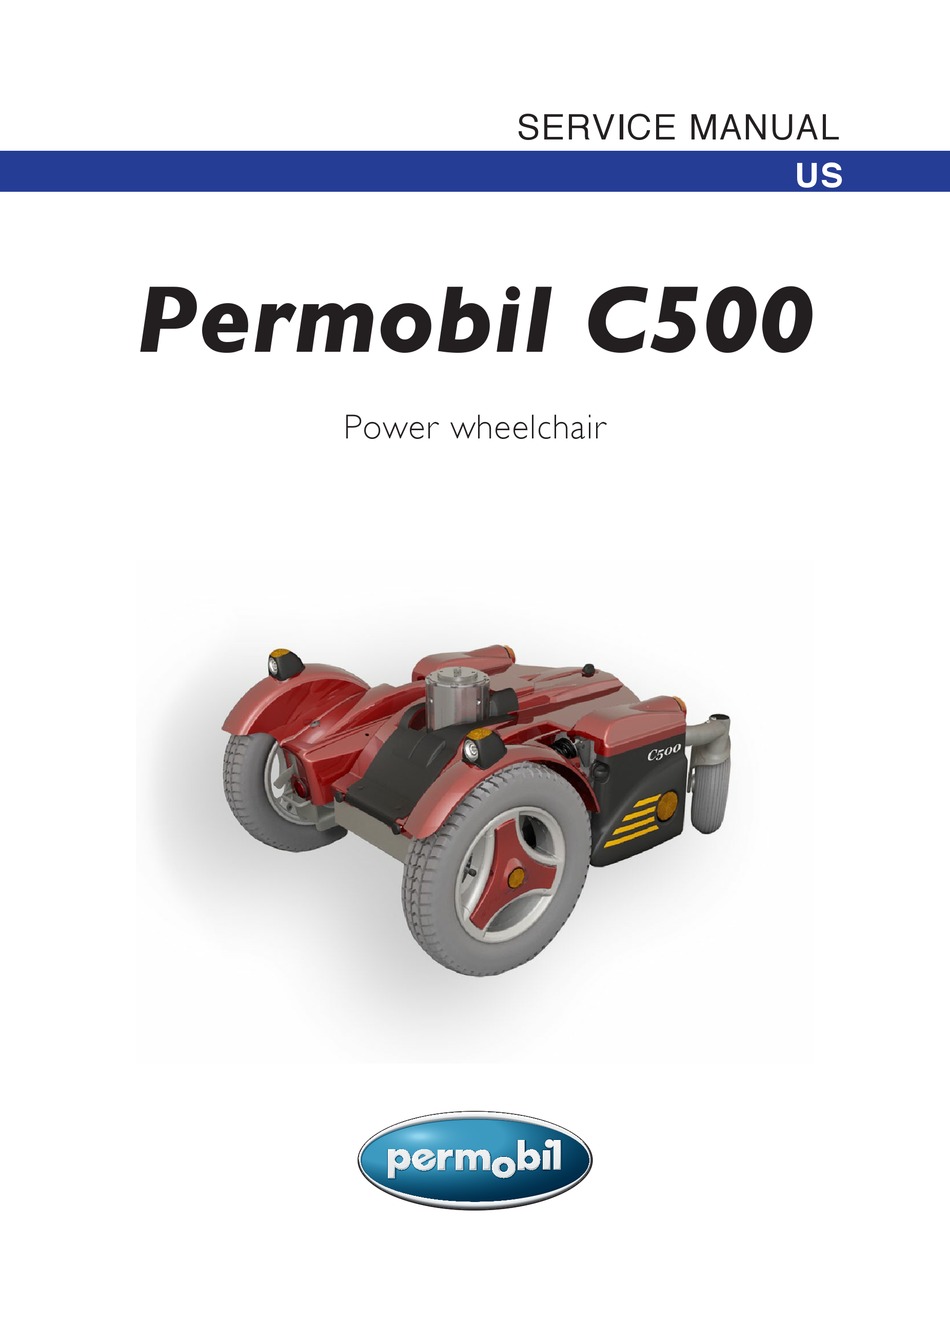 PERMOBIL C500 SERVICE MANUAL Pdf Download | ManualsLib